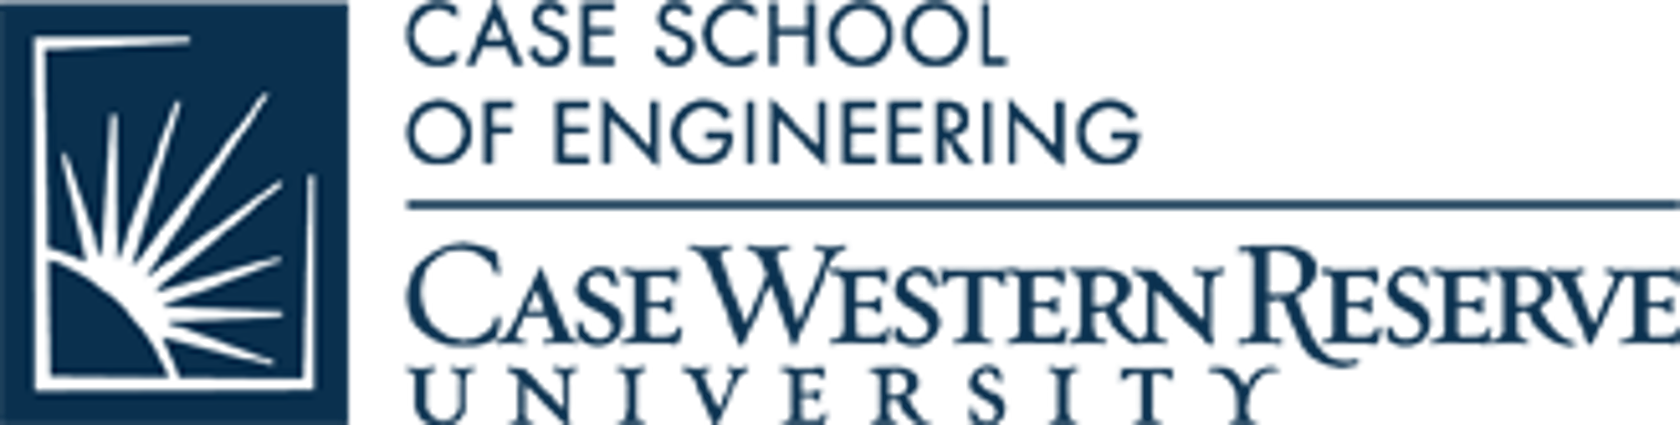 Case Western Reserve University Engineering